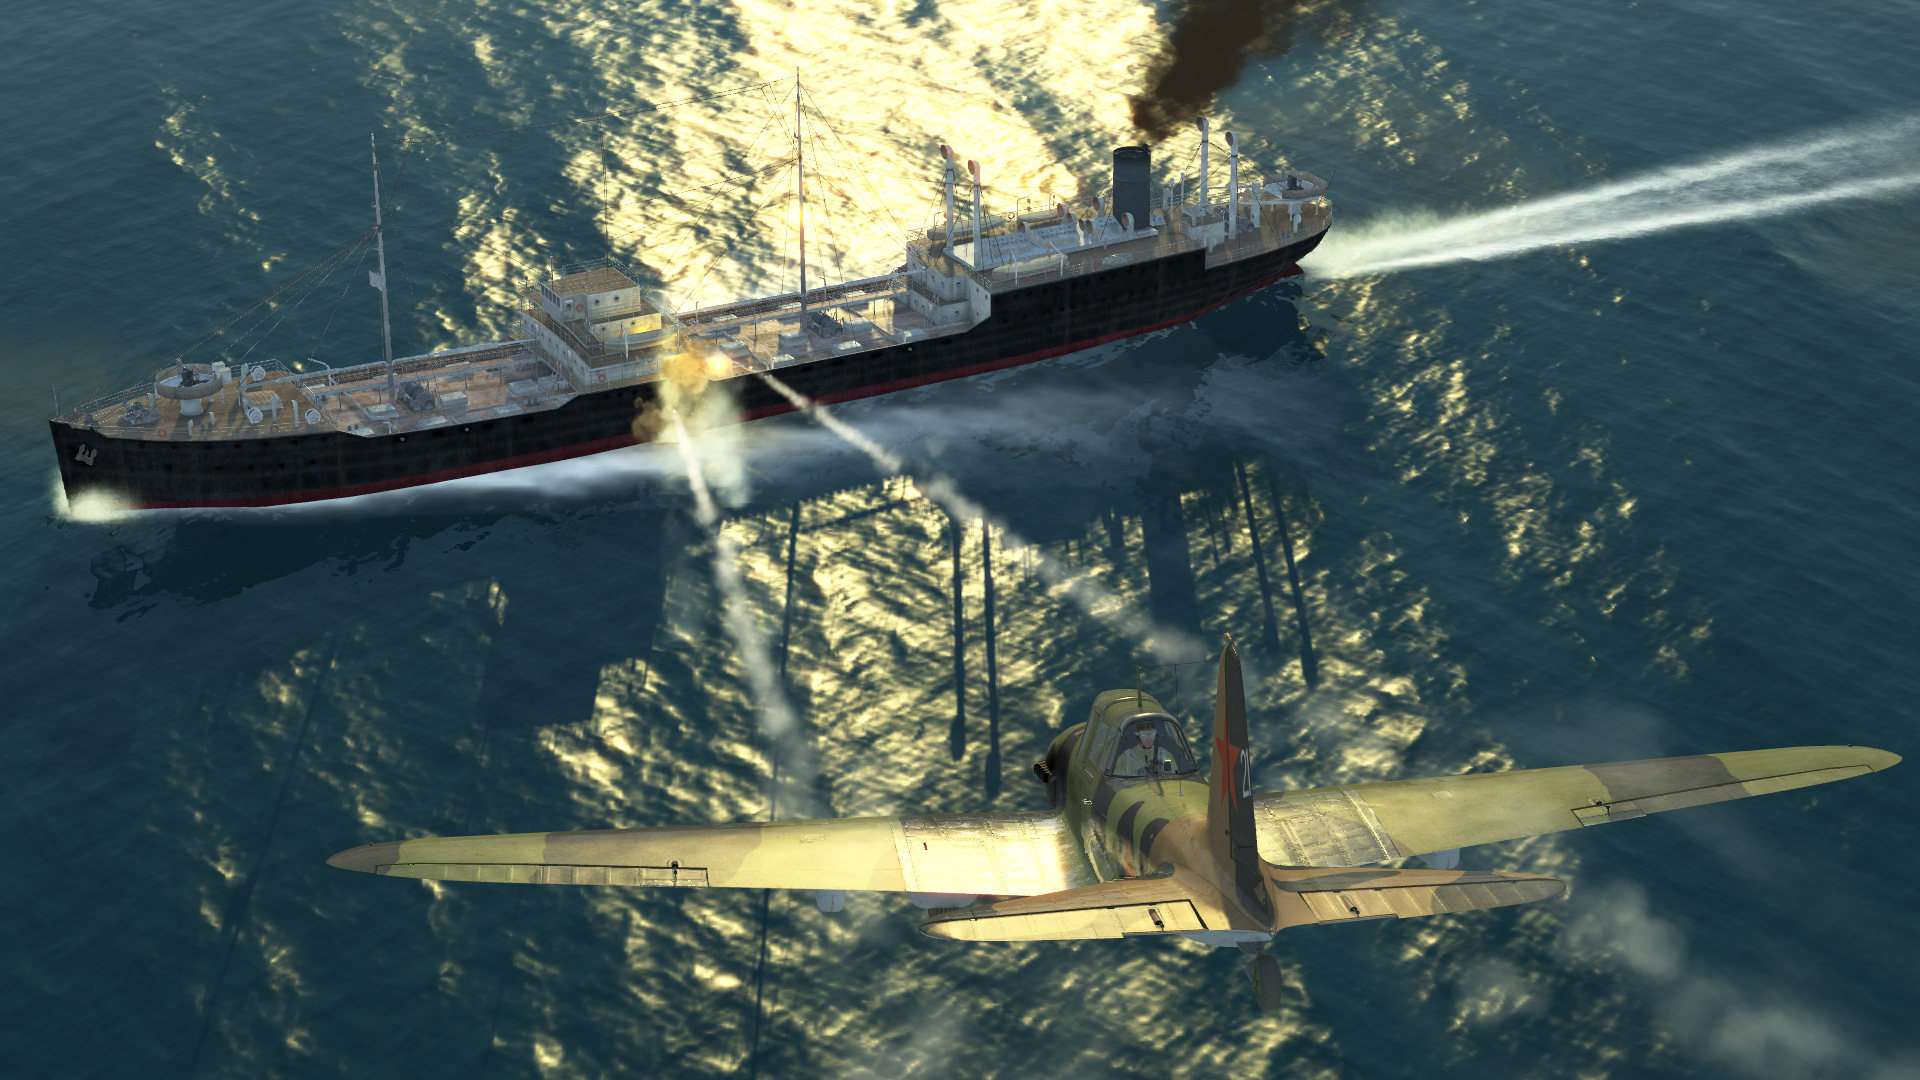 IL-2 Sturmovik: Battle of Kuban screenshot